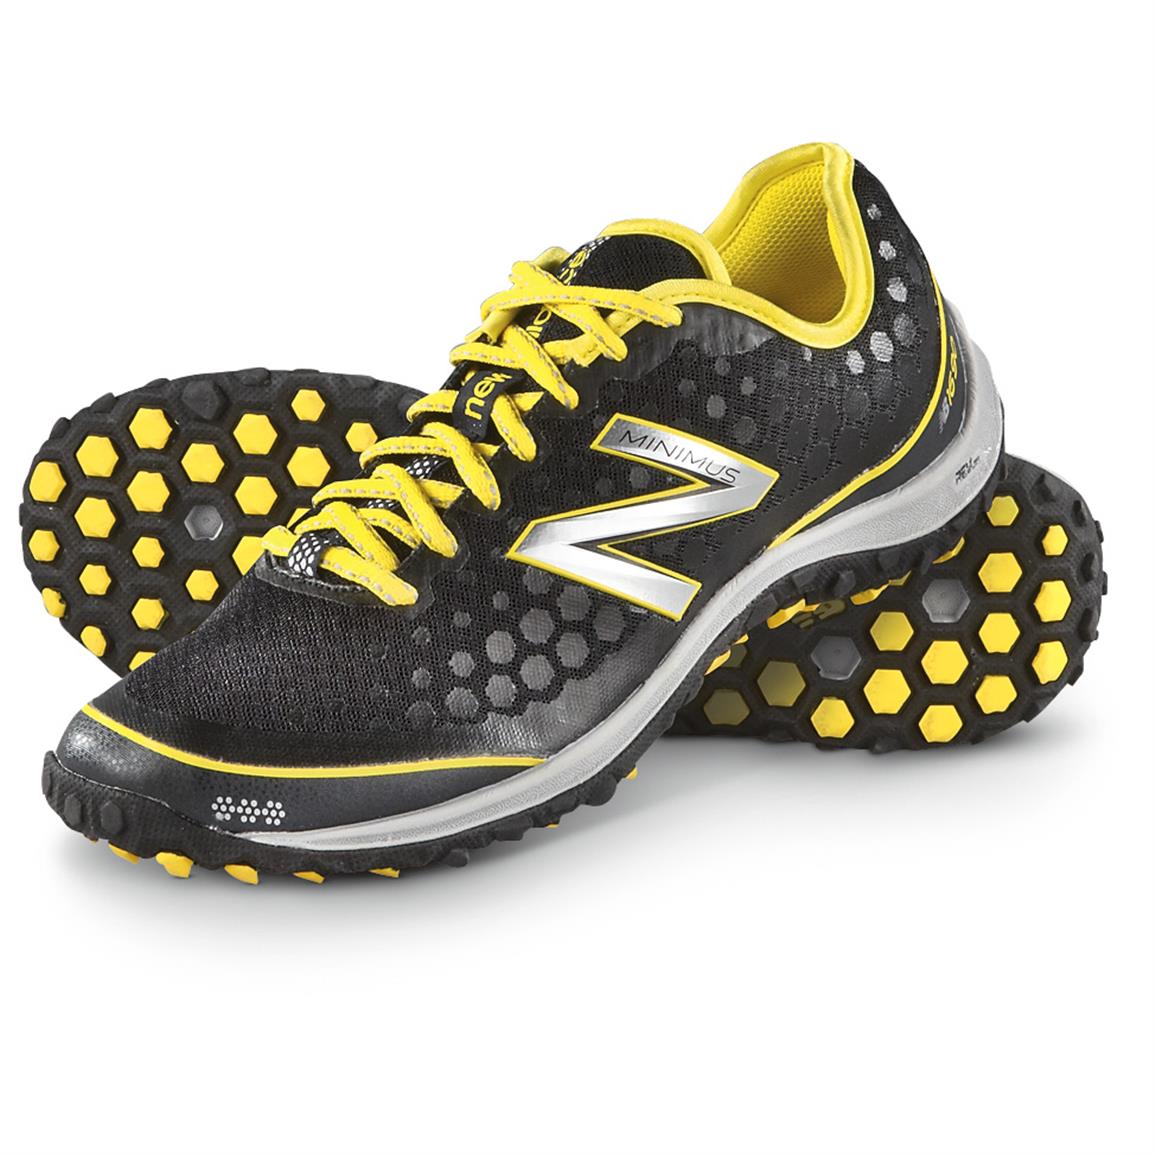 Men S New Balance M1690 Running Shoes Black Yellow 609813